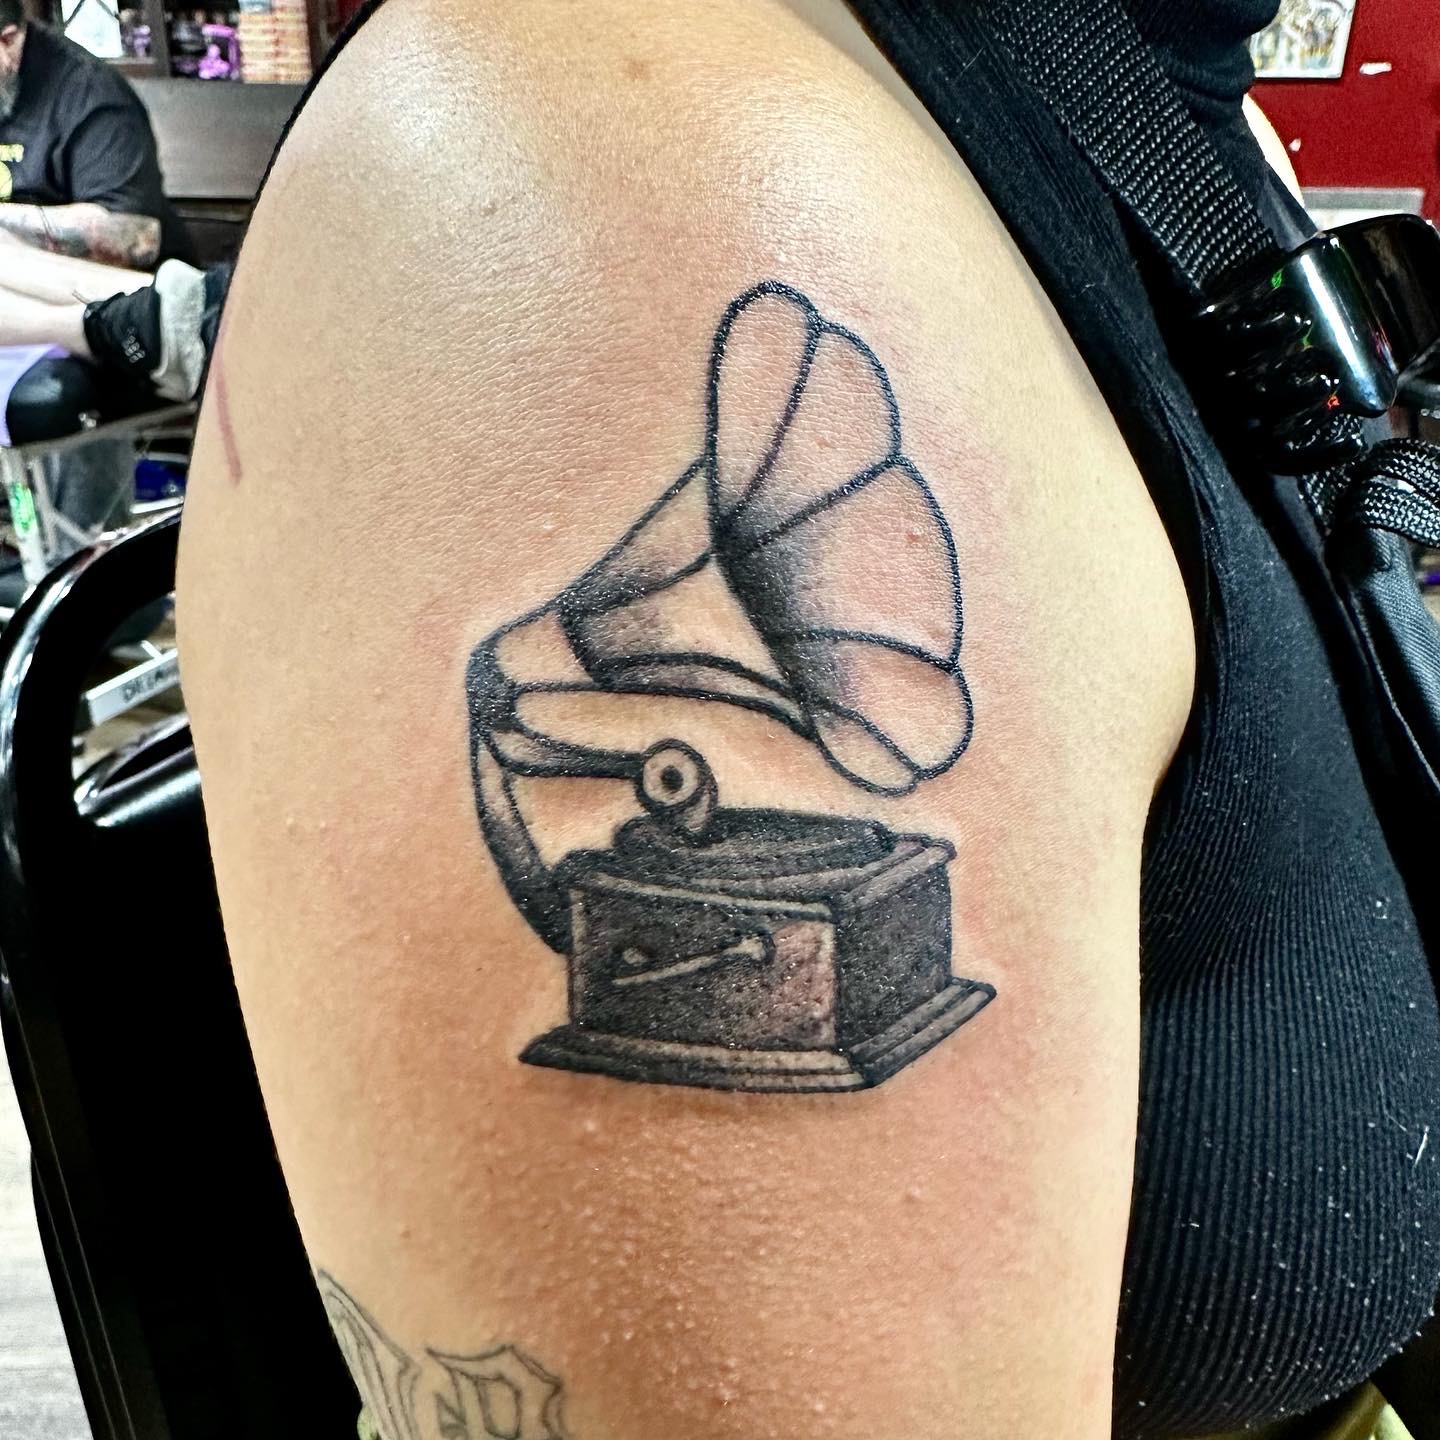 tattoo of a gramophone